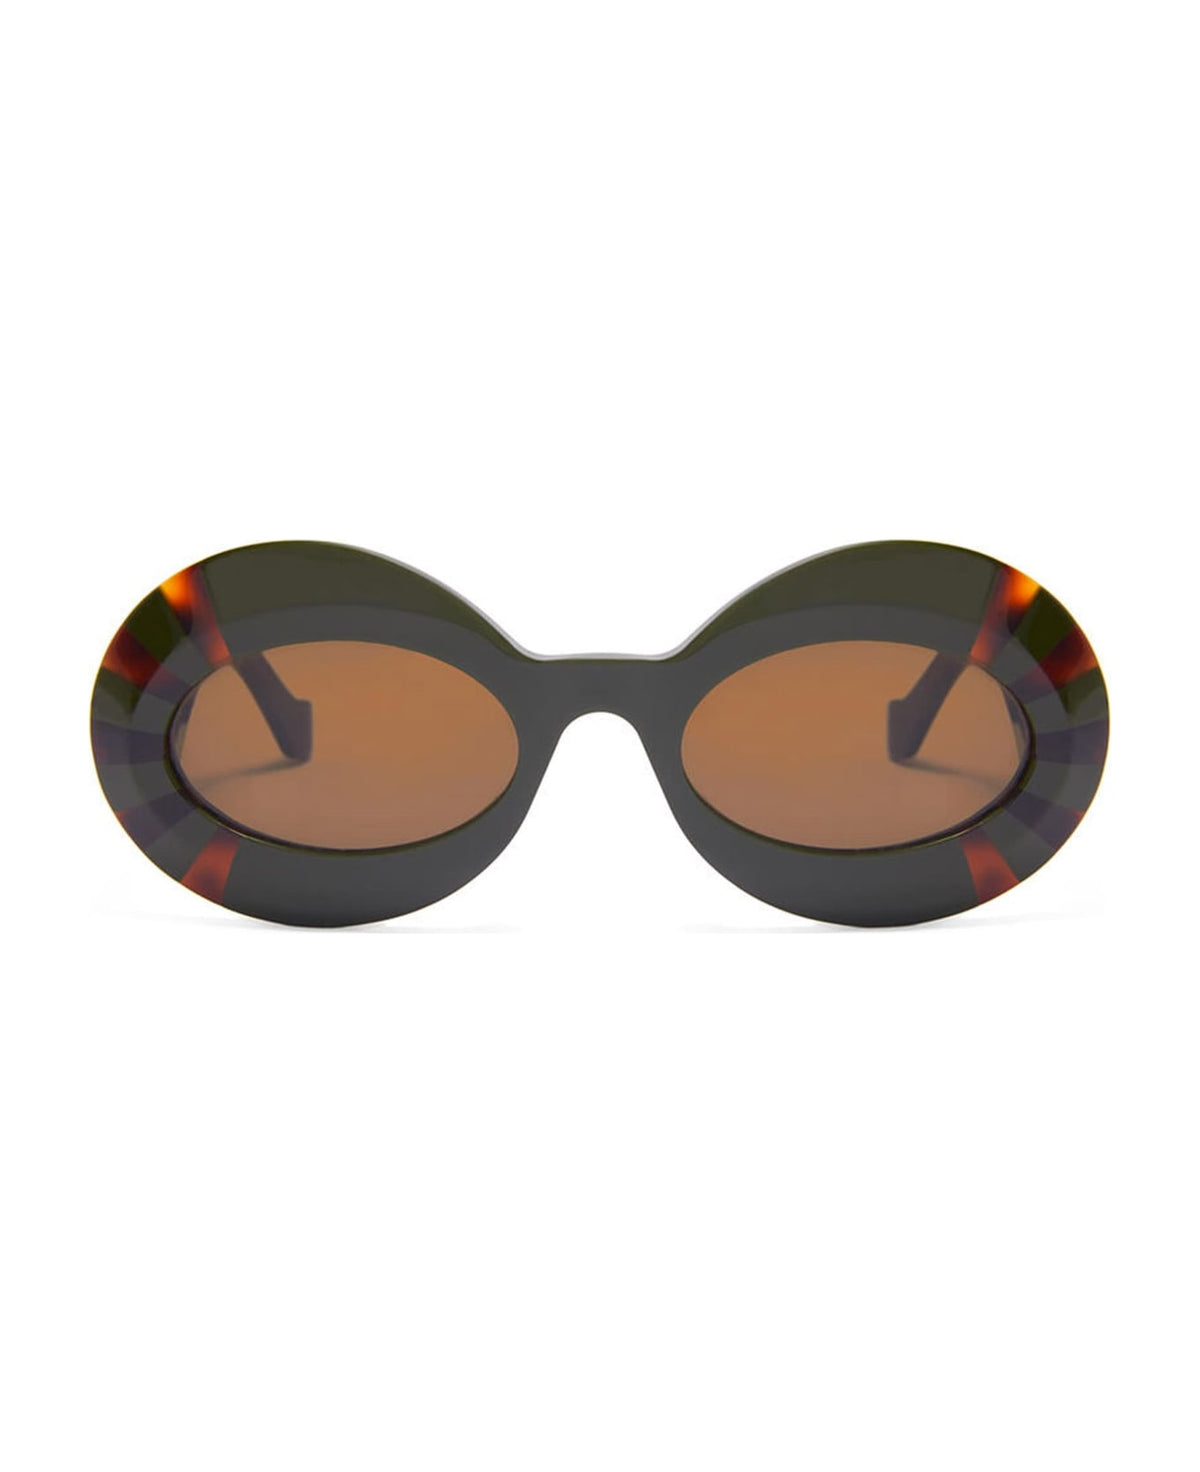 Lw40091i - Green / Brown Sunglasses